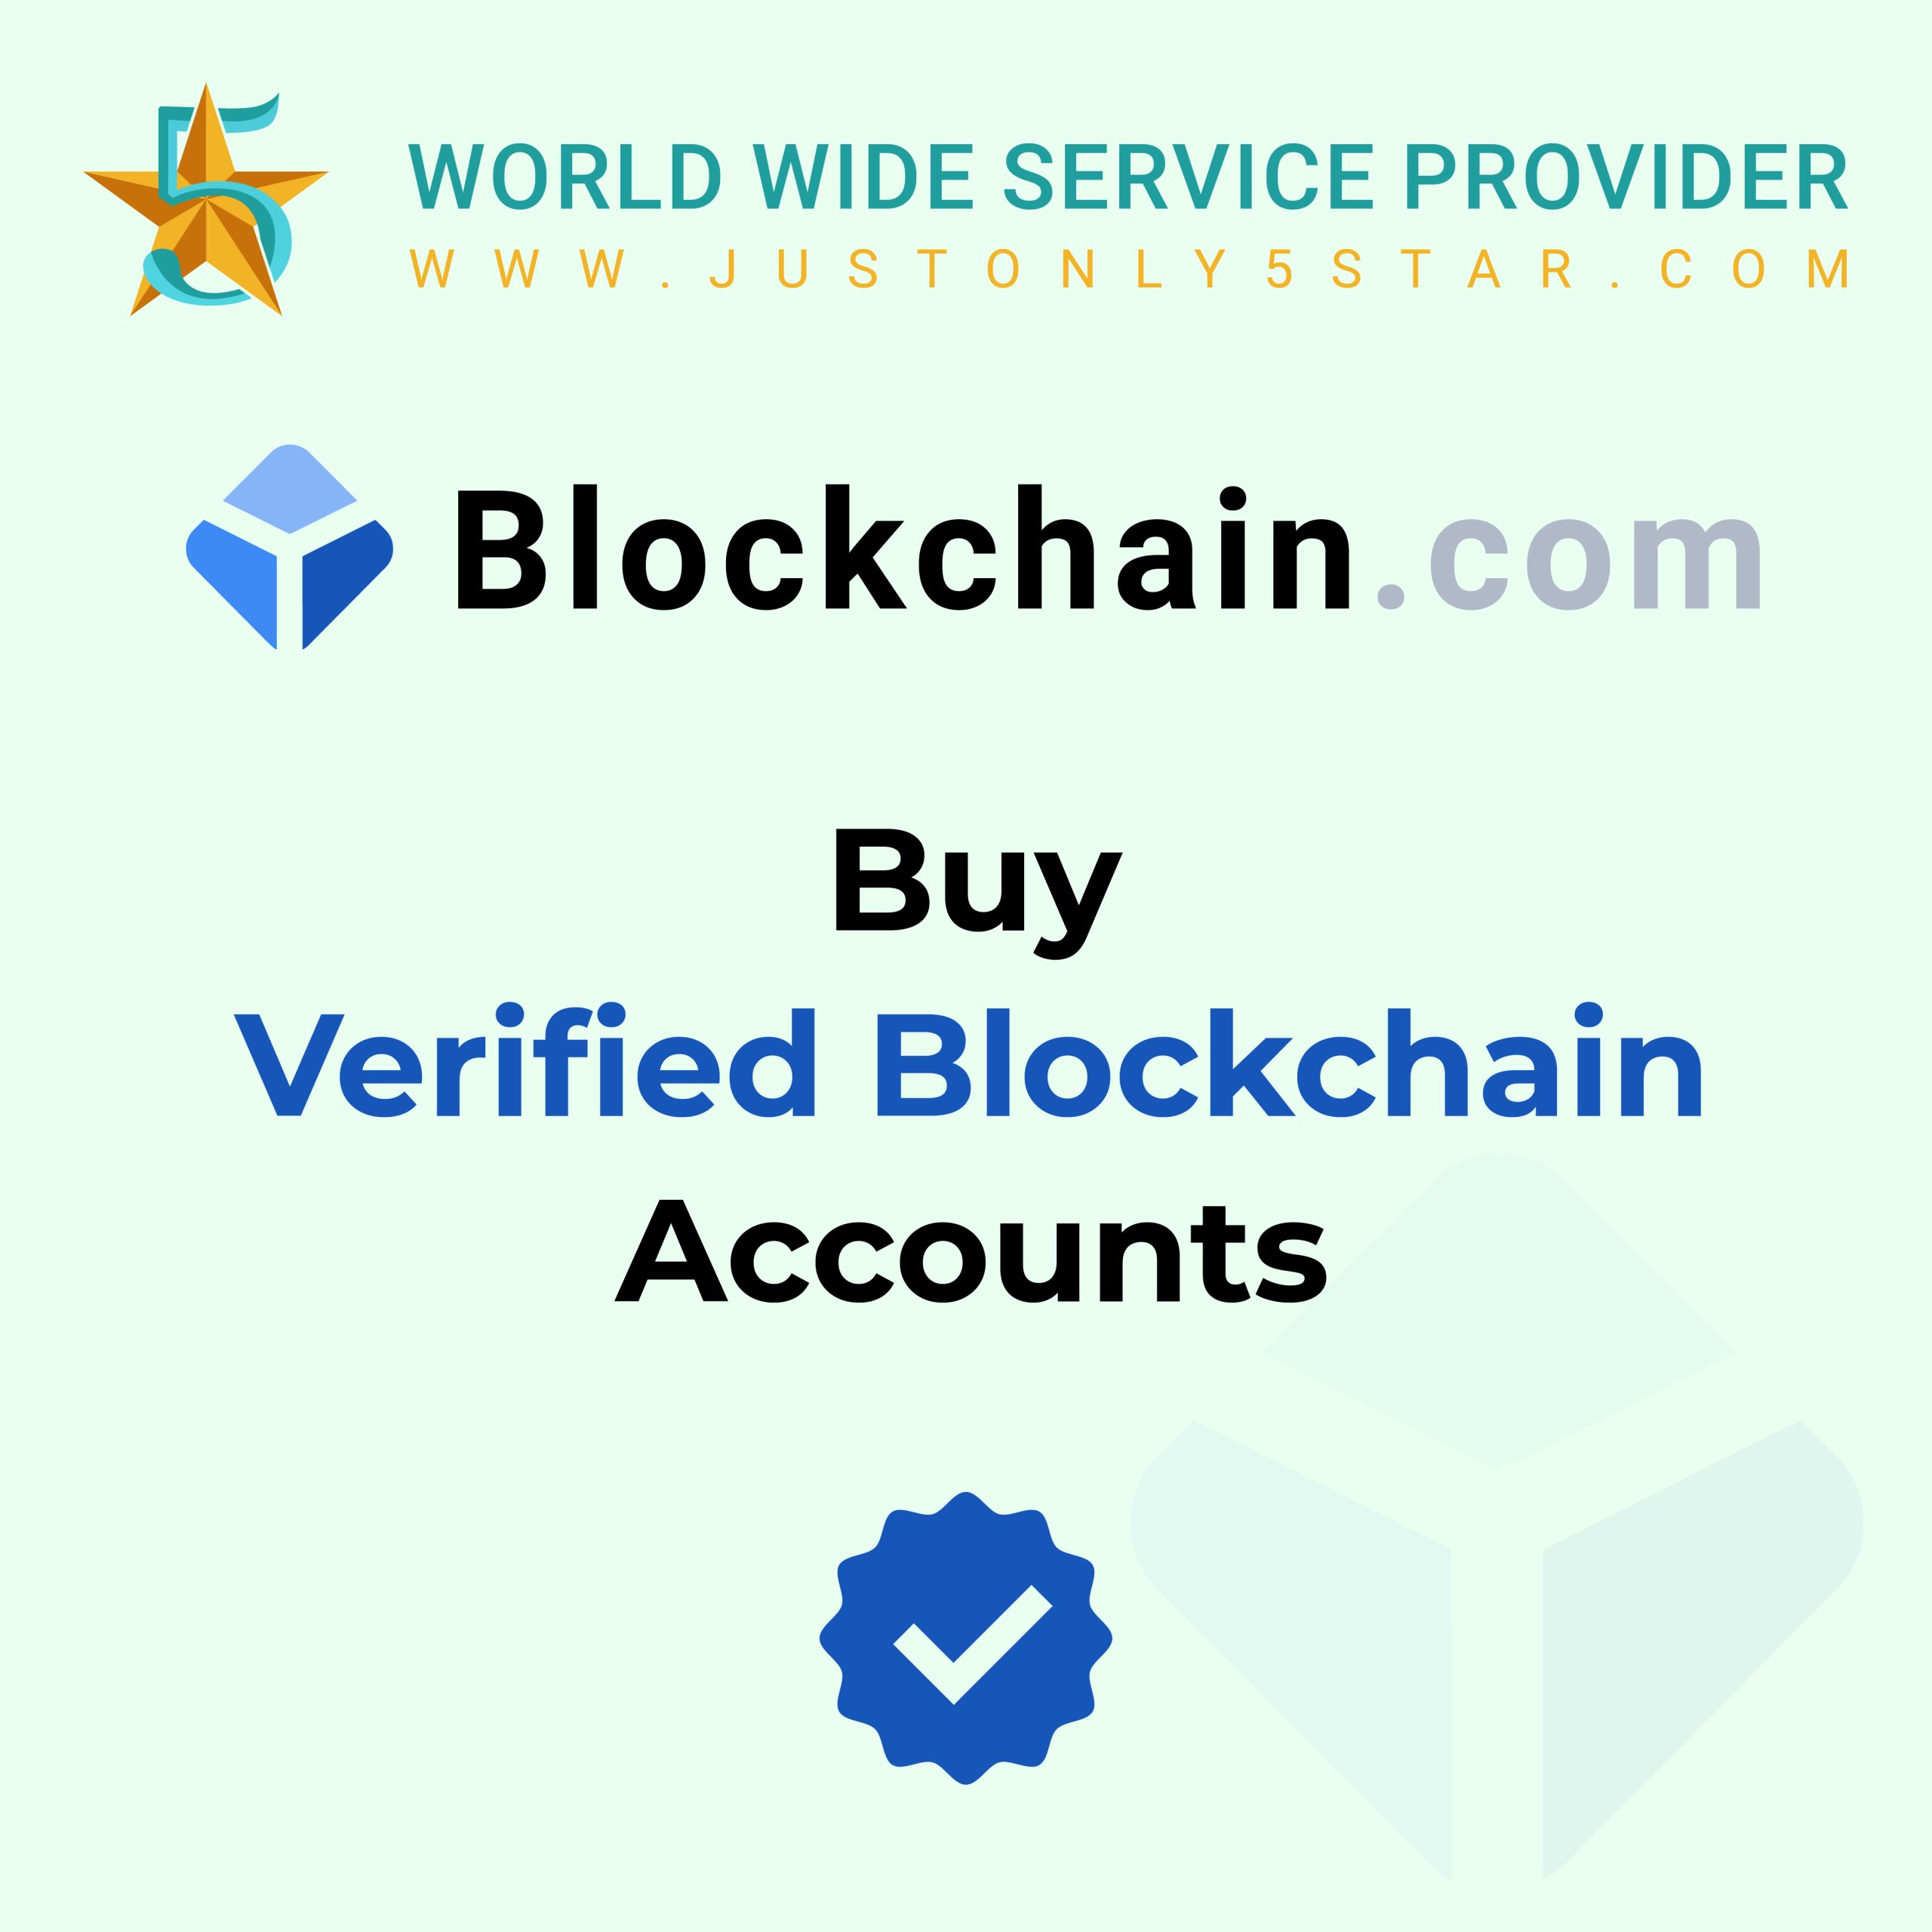 Verified Blockchain Accounts